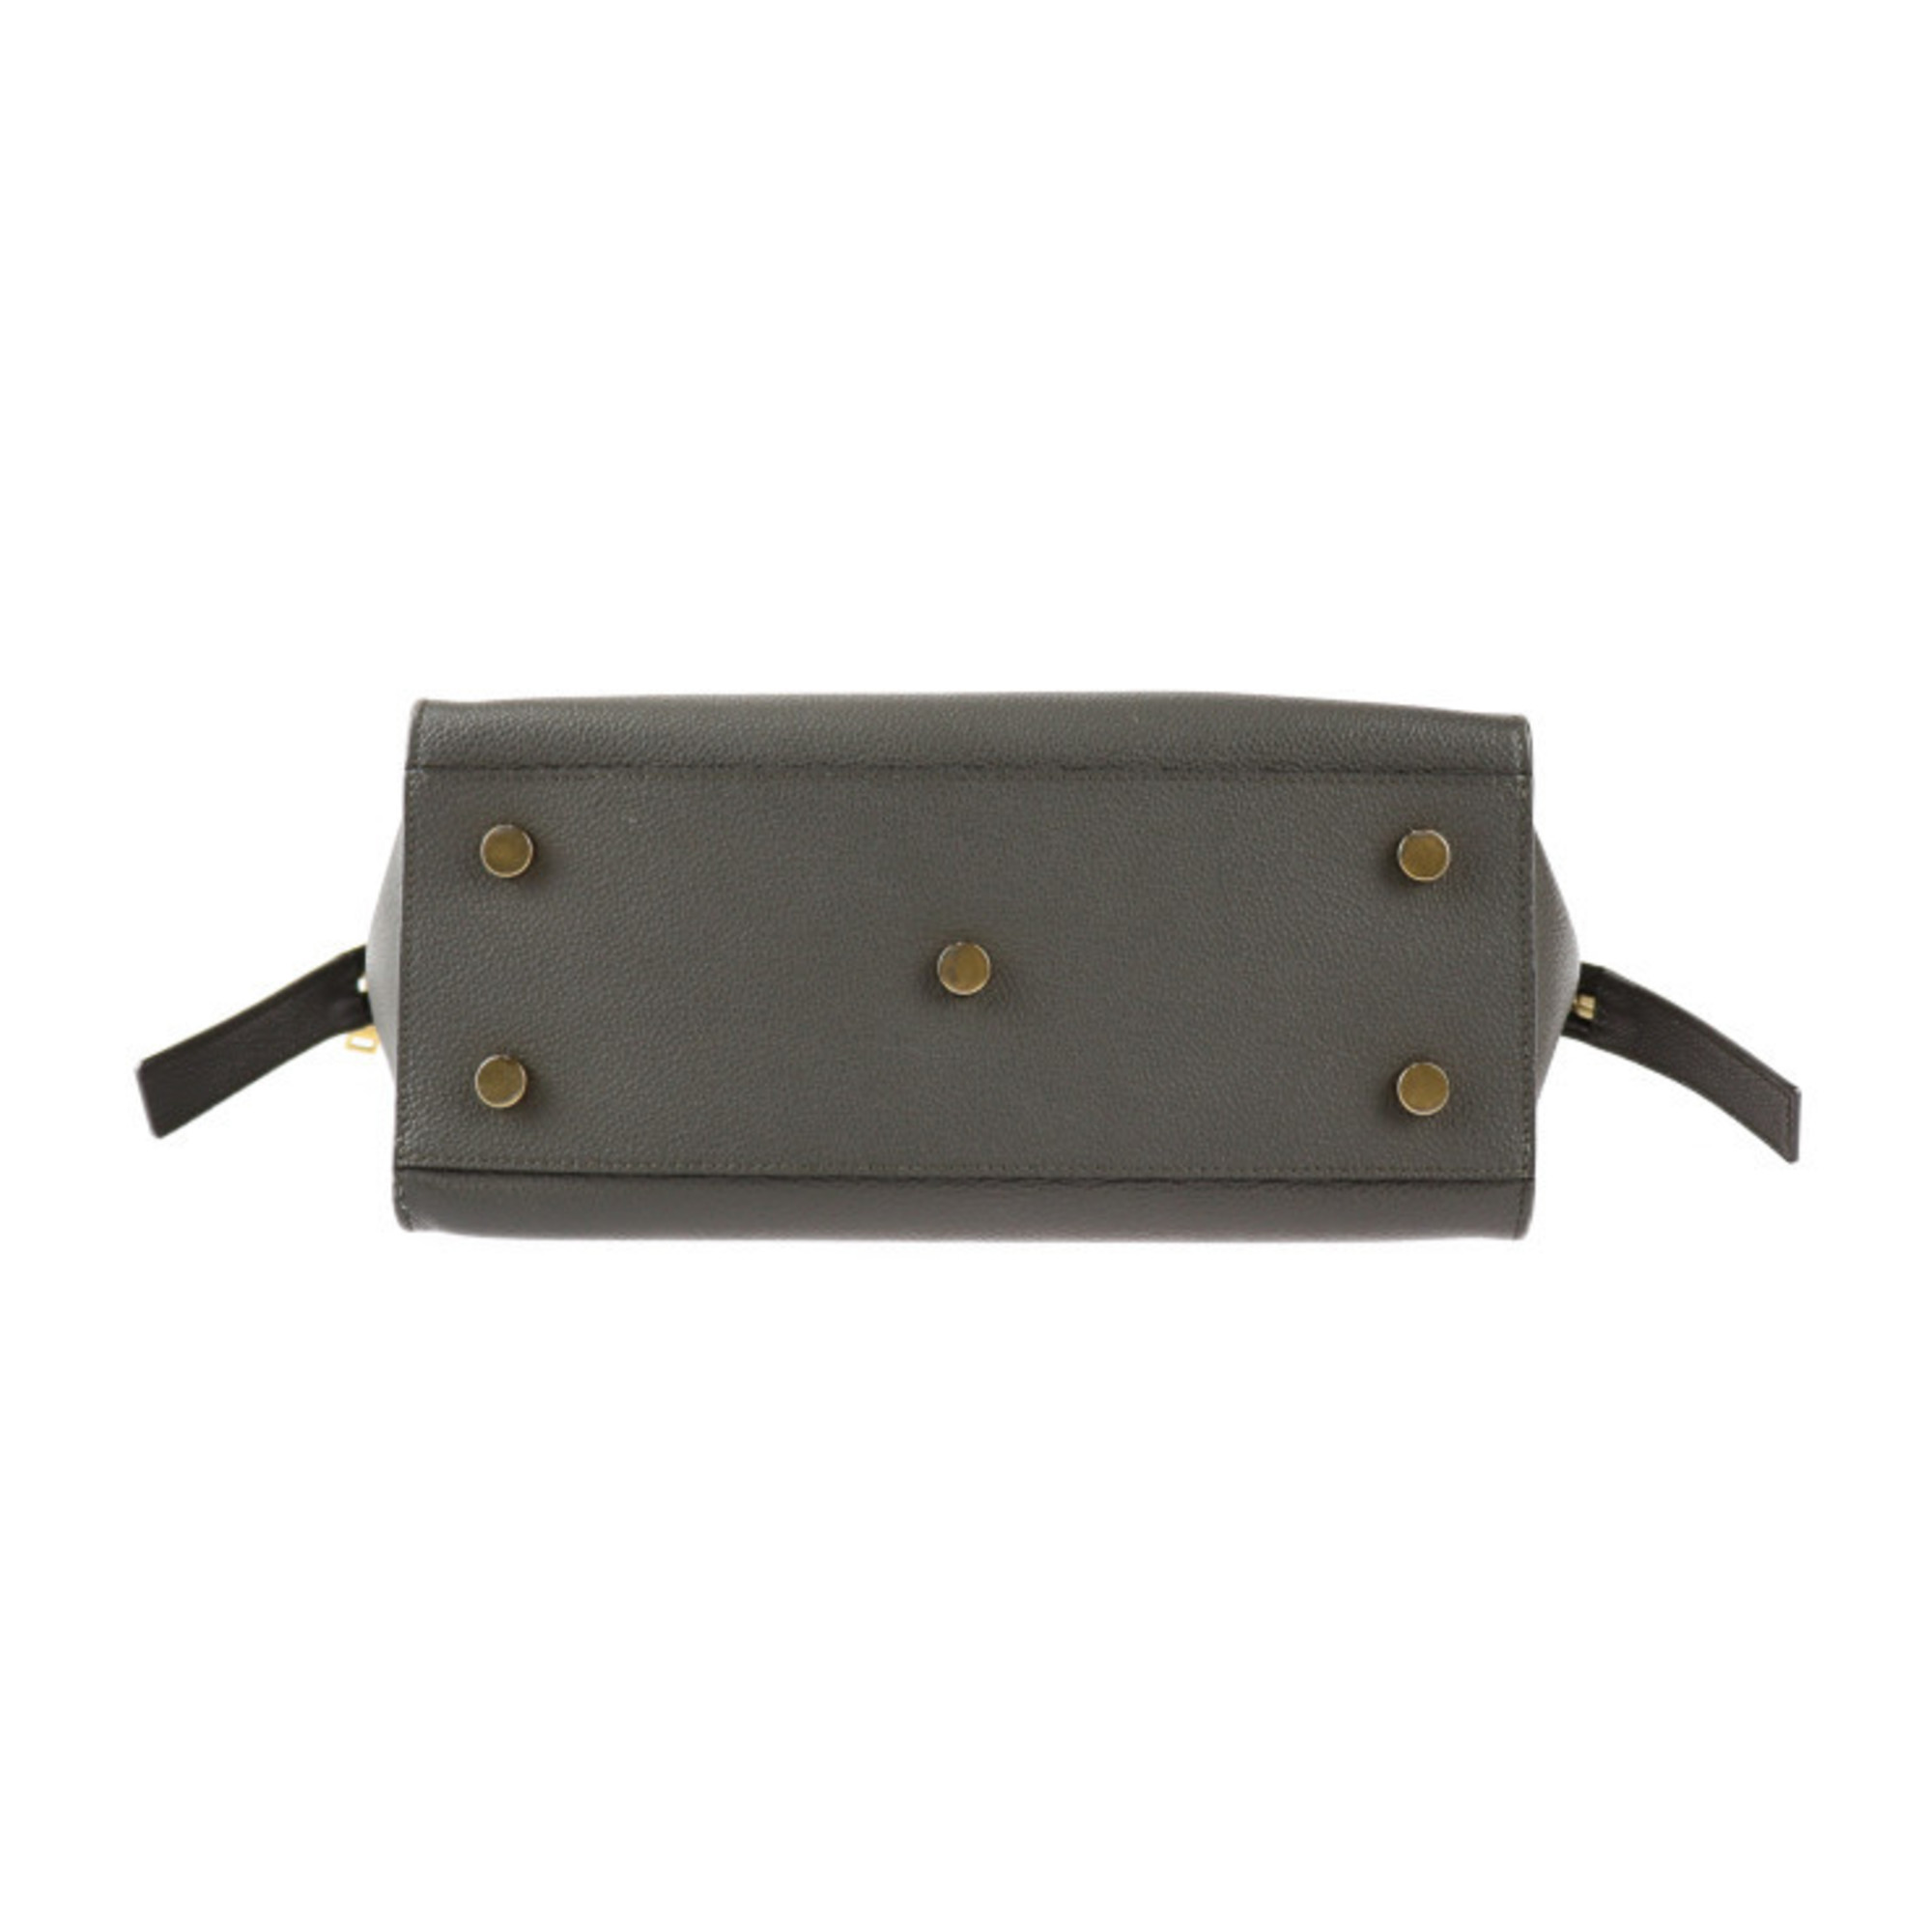 SAINT LAURENT Saint Laurent Handbag 635346 Grain Leather Gray Gold Hardware 2WAY Shoulder Bag